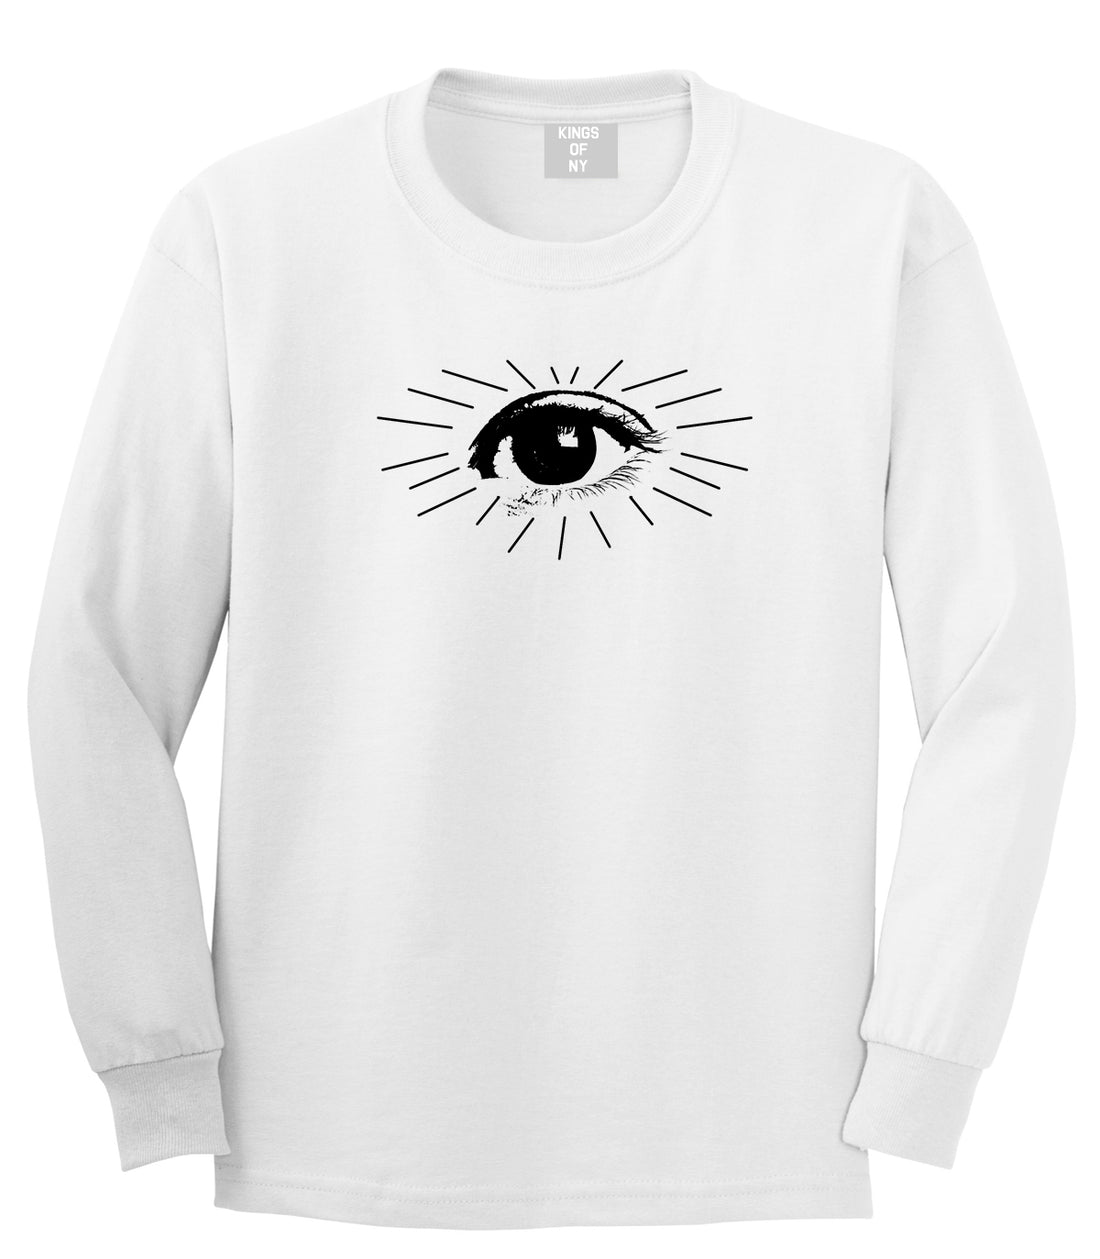 Eyeball Eyes Print Mens White Long Sleeve T-Shirt by KINGS OF NY